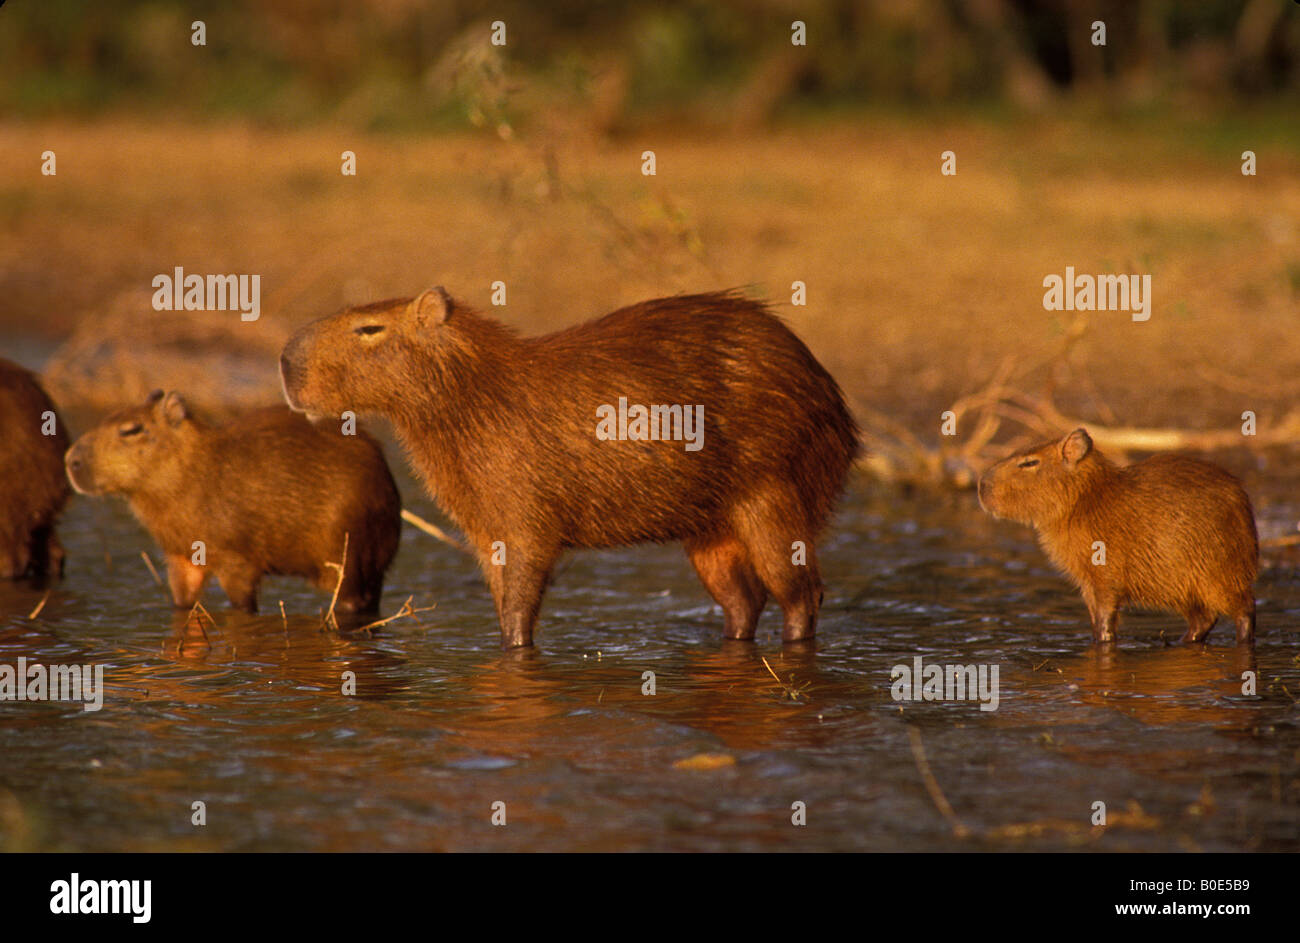 Capybara (Hydrochaeris hydrochaeris) - Venezuela - Mother and young - World's largest rodent Stock Photo